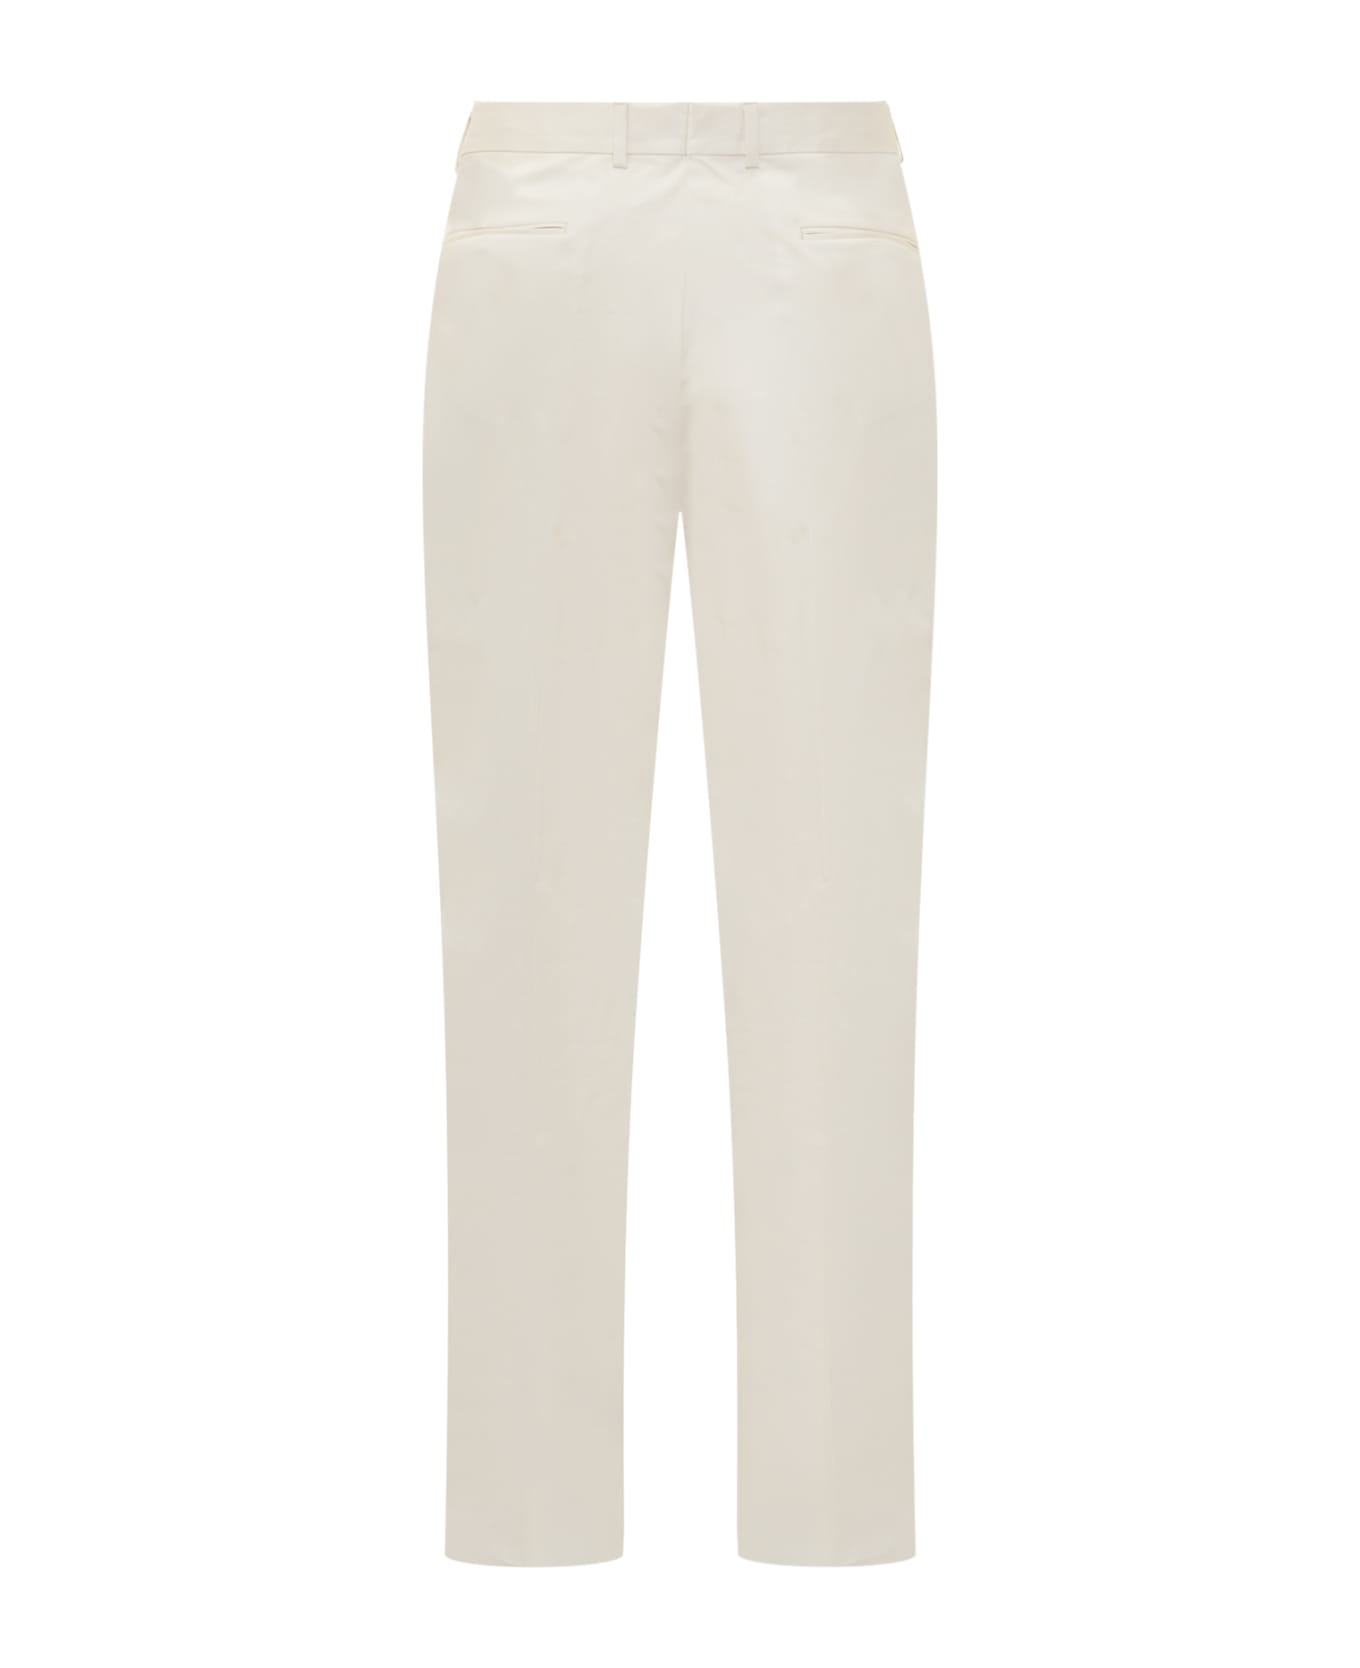 Zegna Premium Trousers - 715F10A7 BIANCO